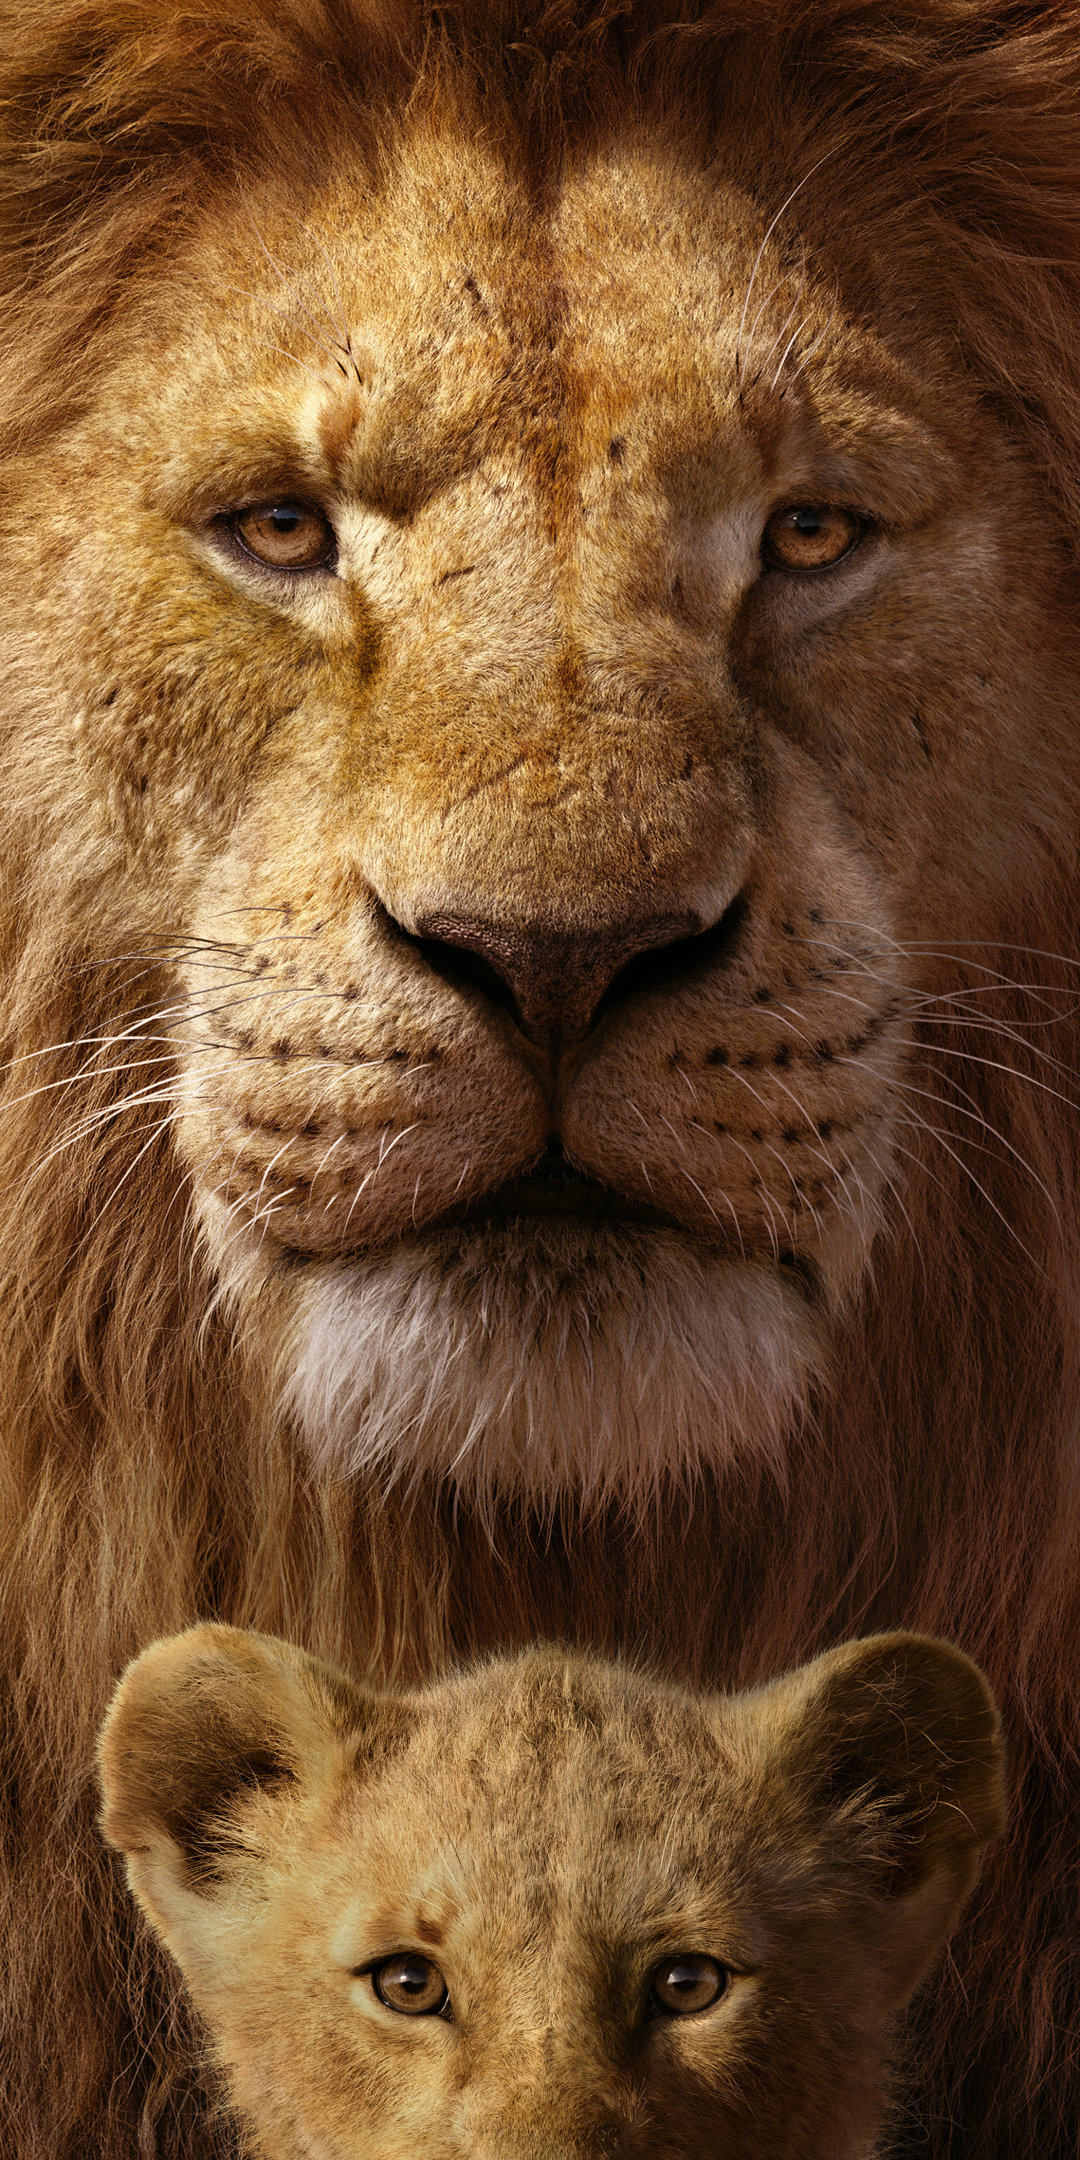 simba, the lion king (2019), movie, mufasa (the lion king)